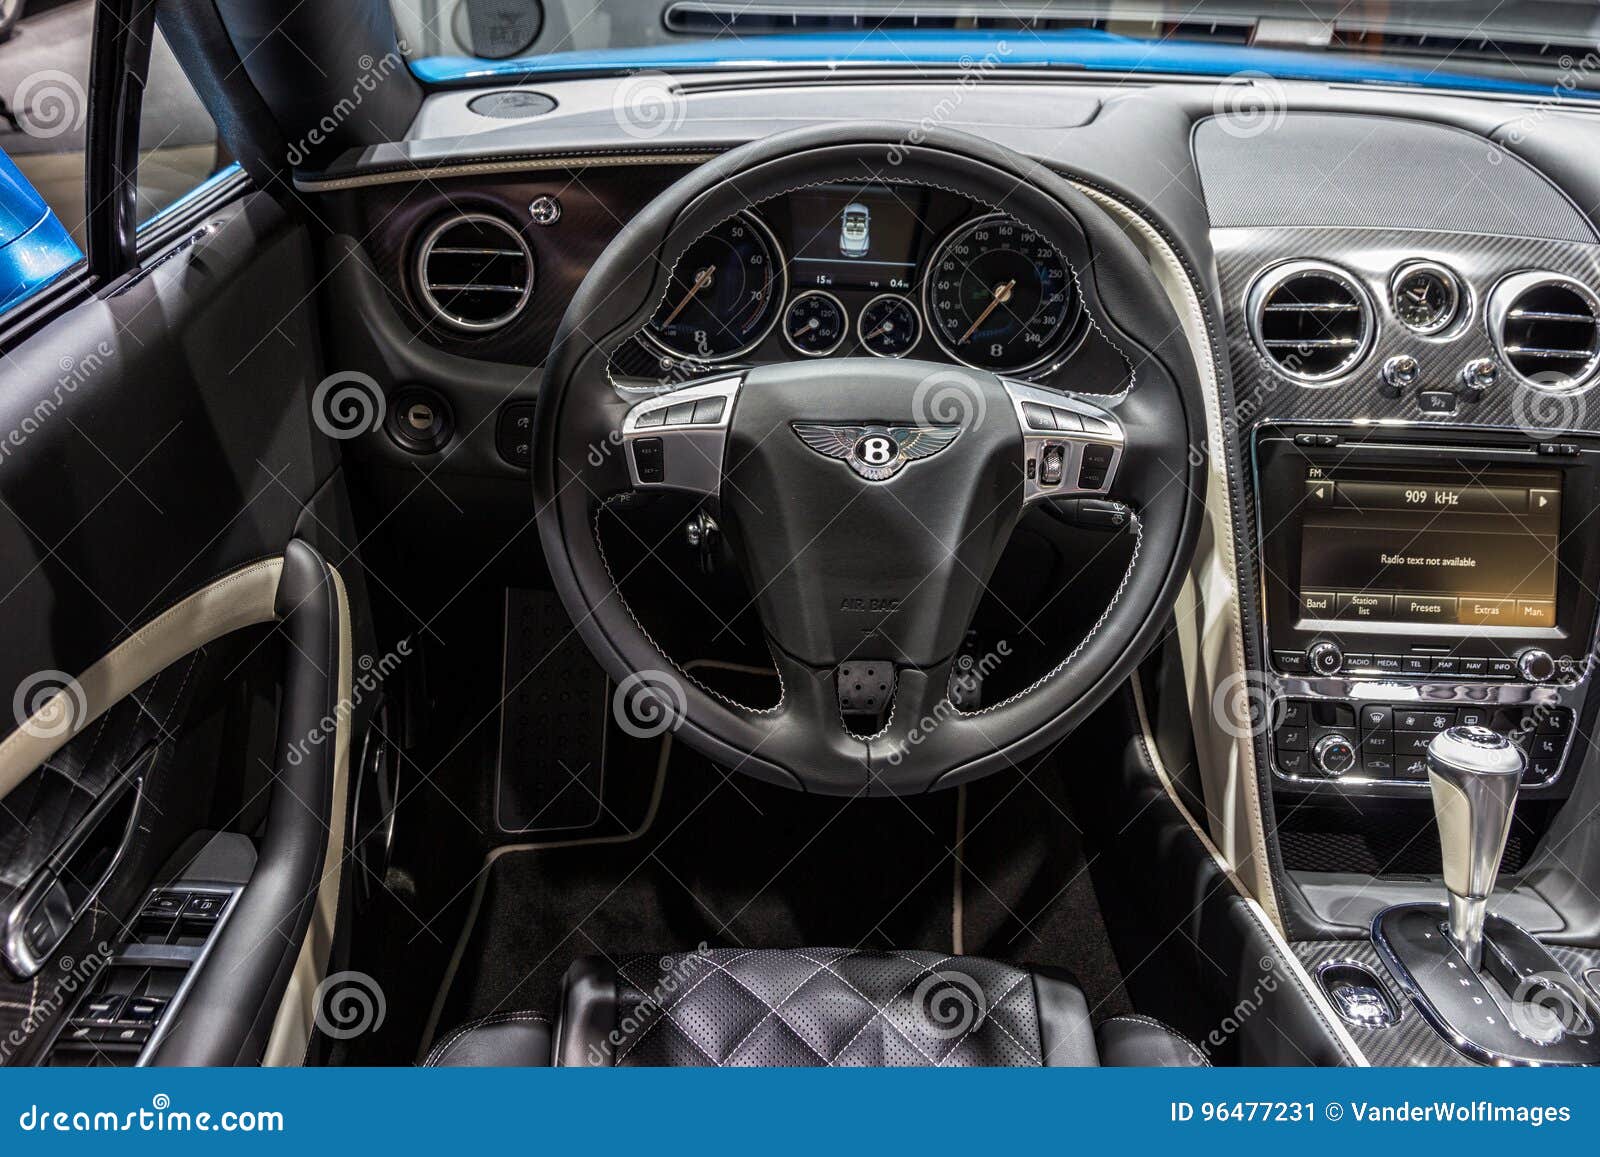 Bentley Continental Gt Speed Interior Editorial Photo